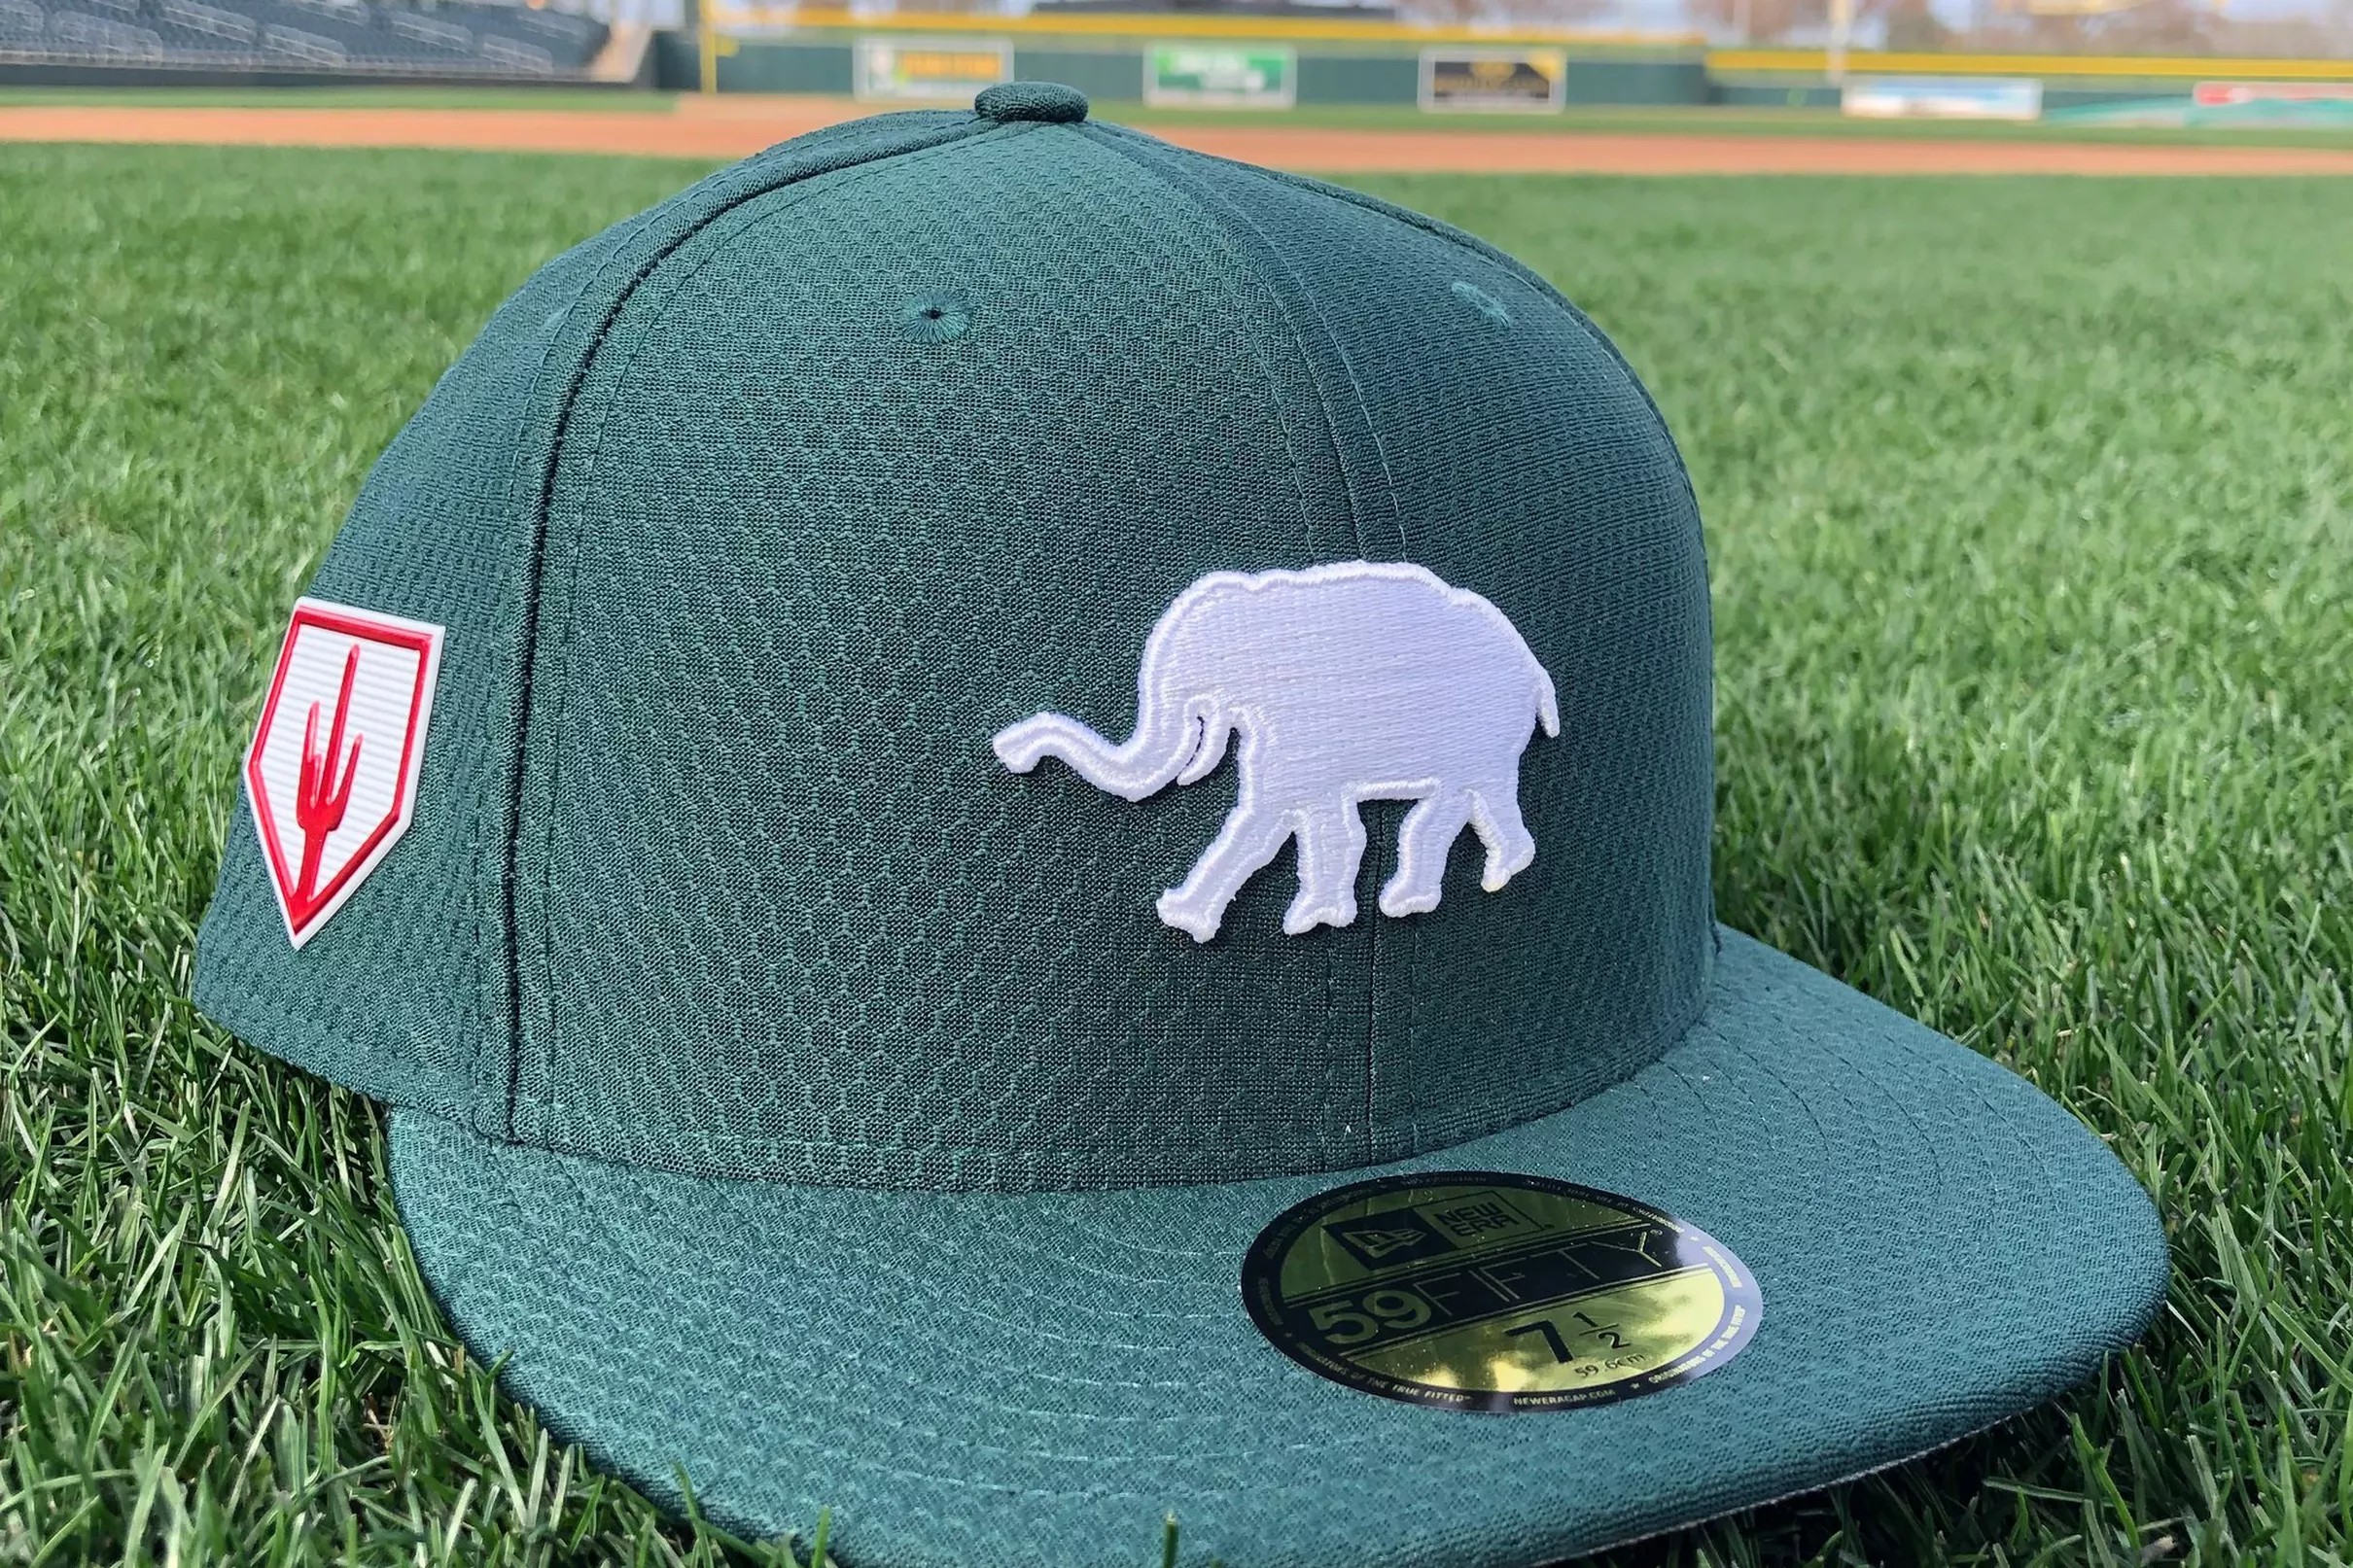 Oakland A’s unveil 2019 spring training cap design